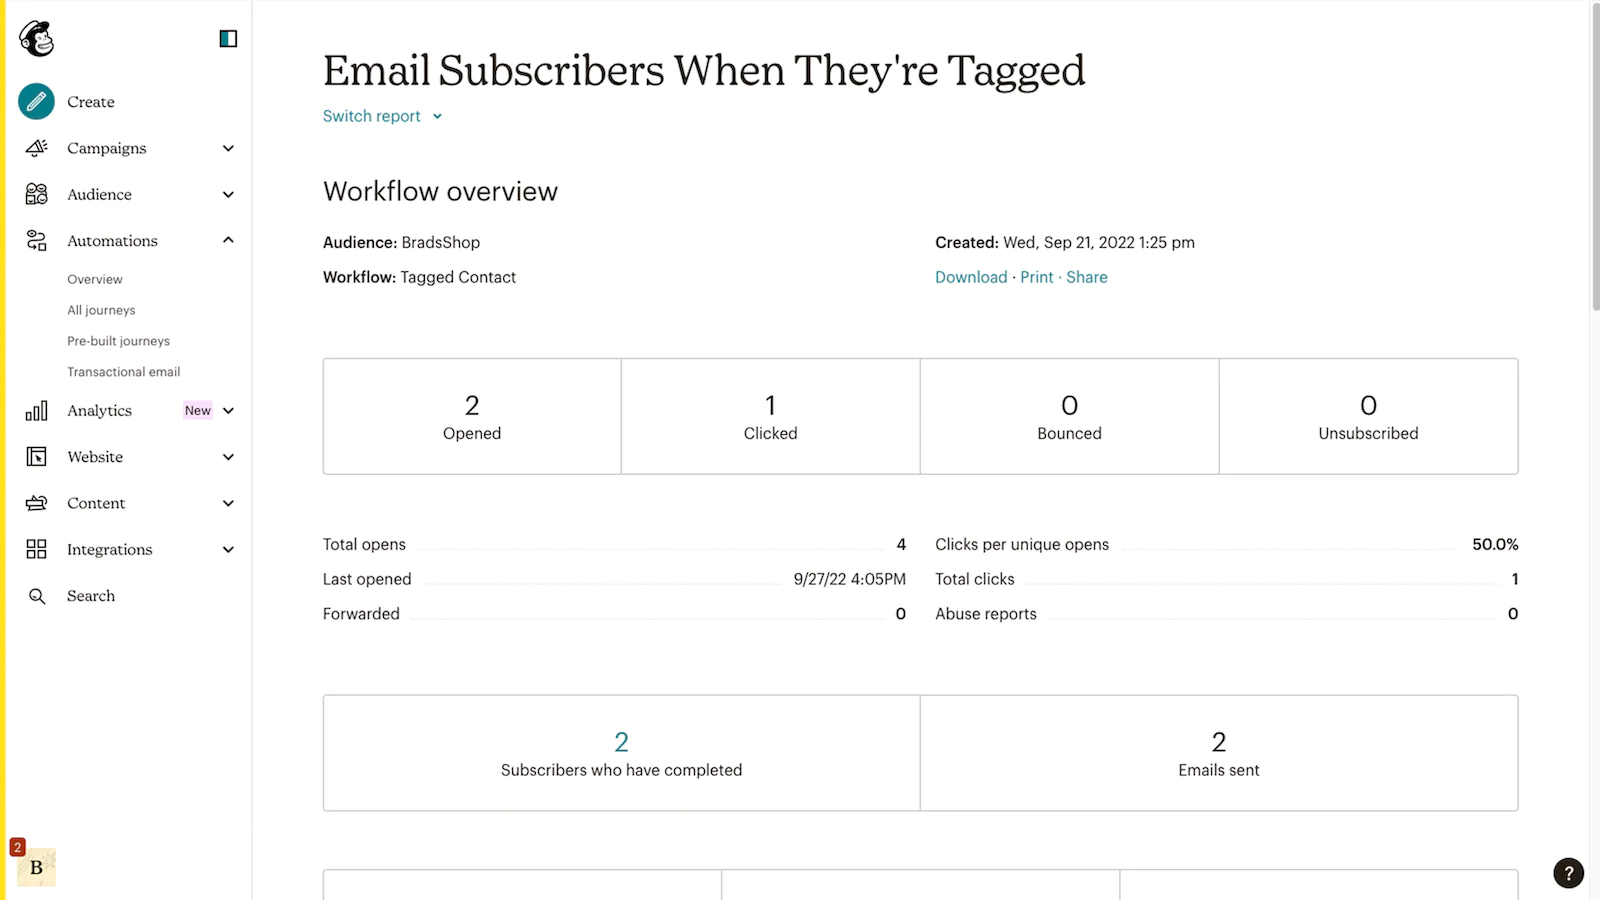 mailchimp-email-marketing-app-workflow-overview